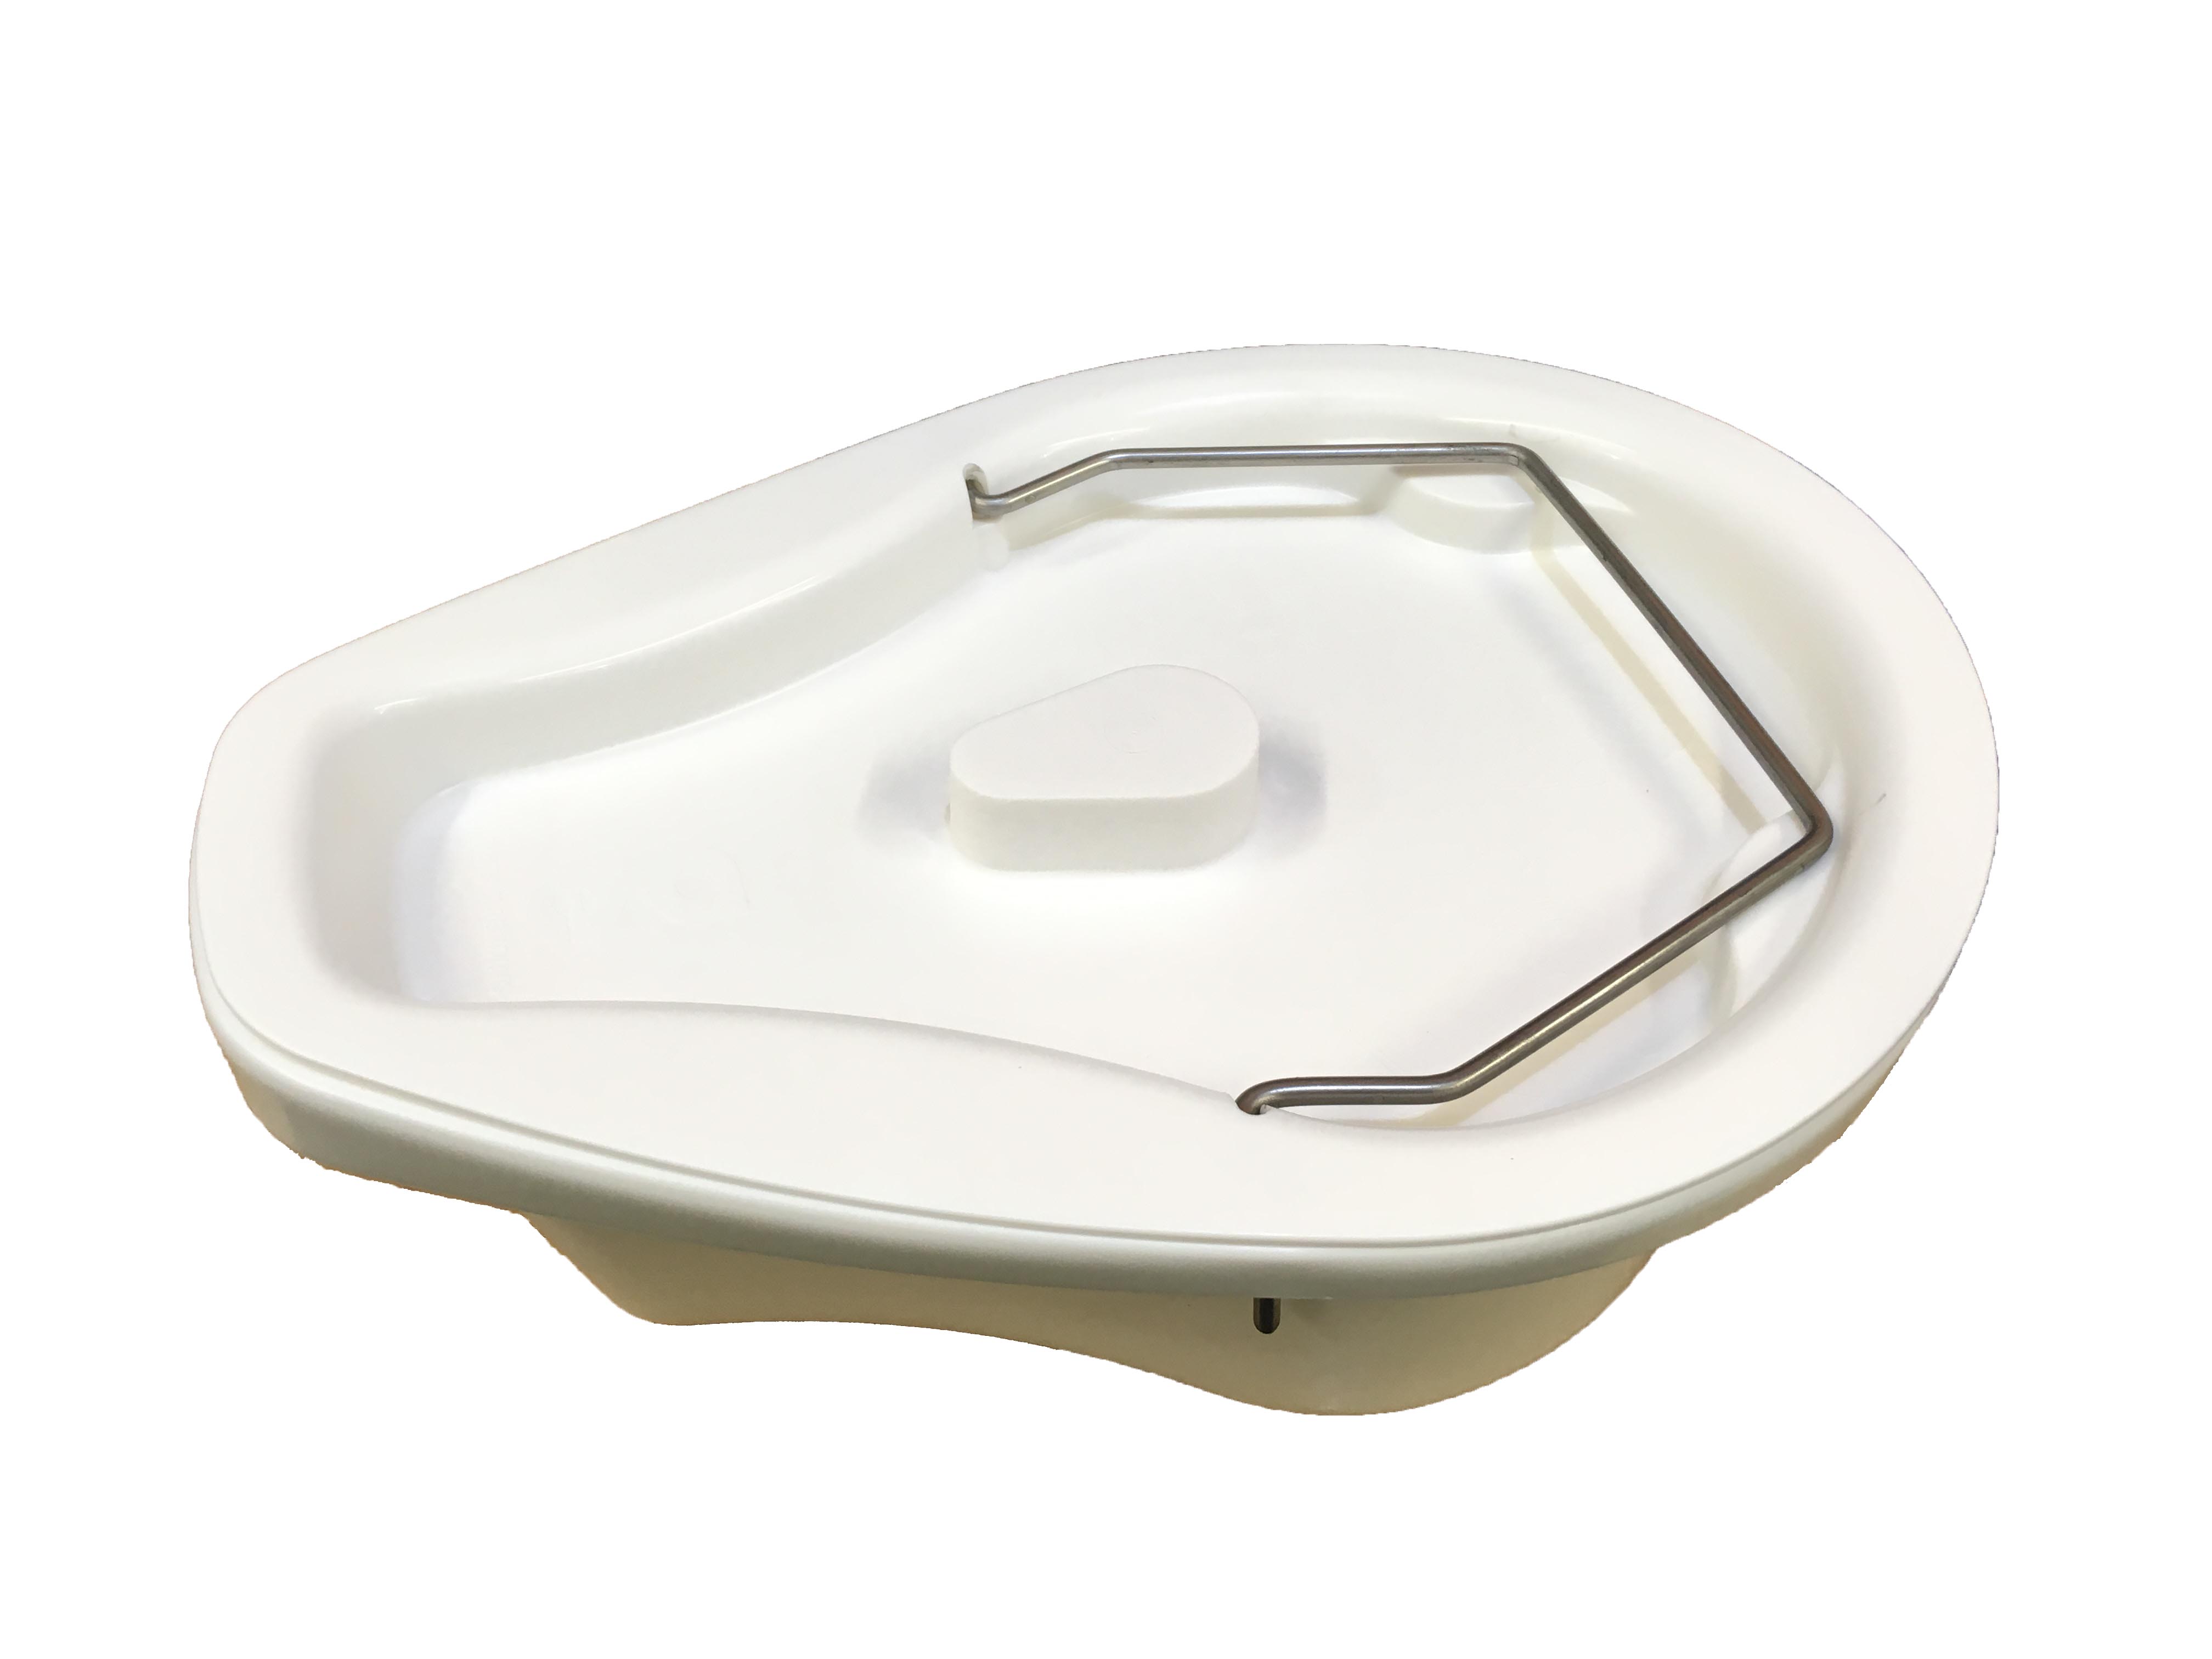 Keyhole Shaped Bedpan with Lid and Handle - Plastic - Li853100034RFL